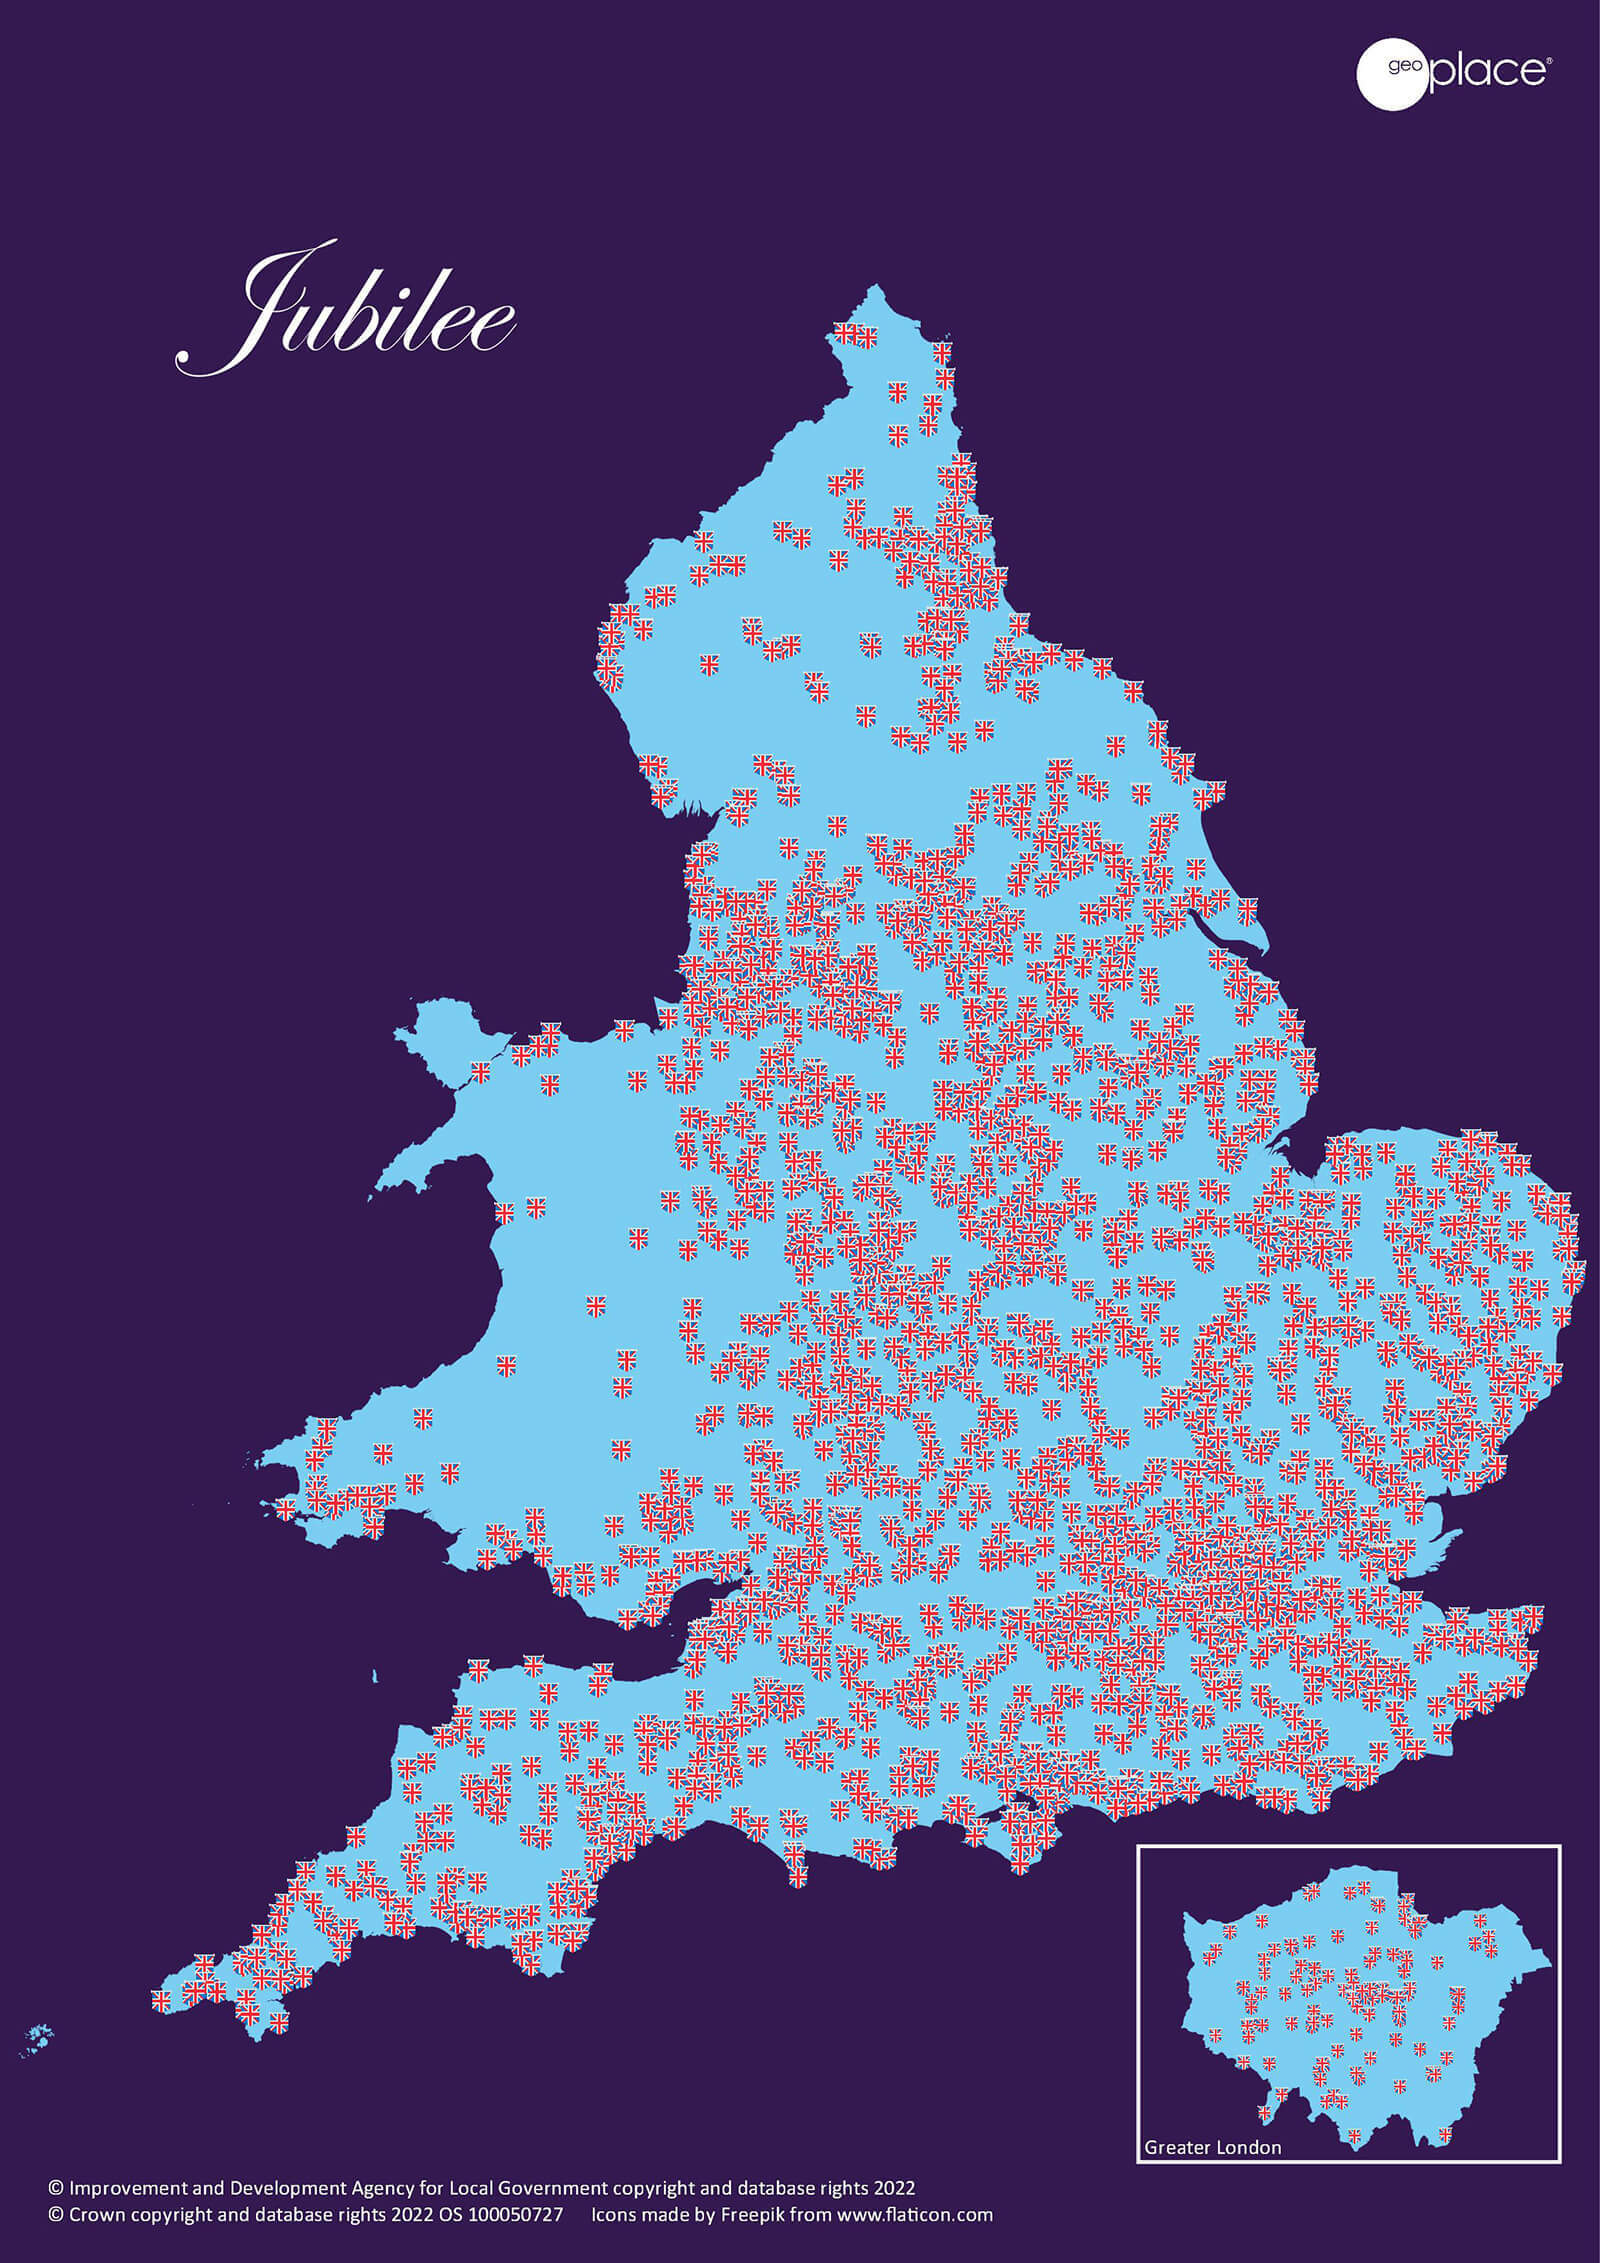 The Jubilee map